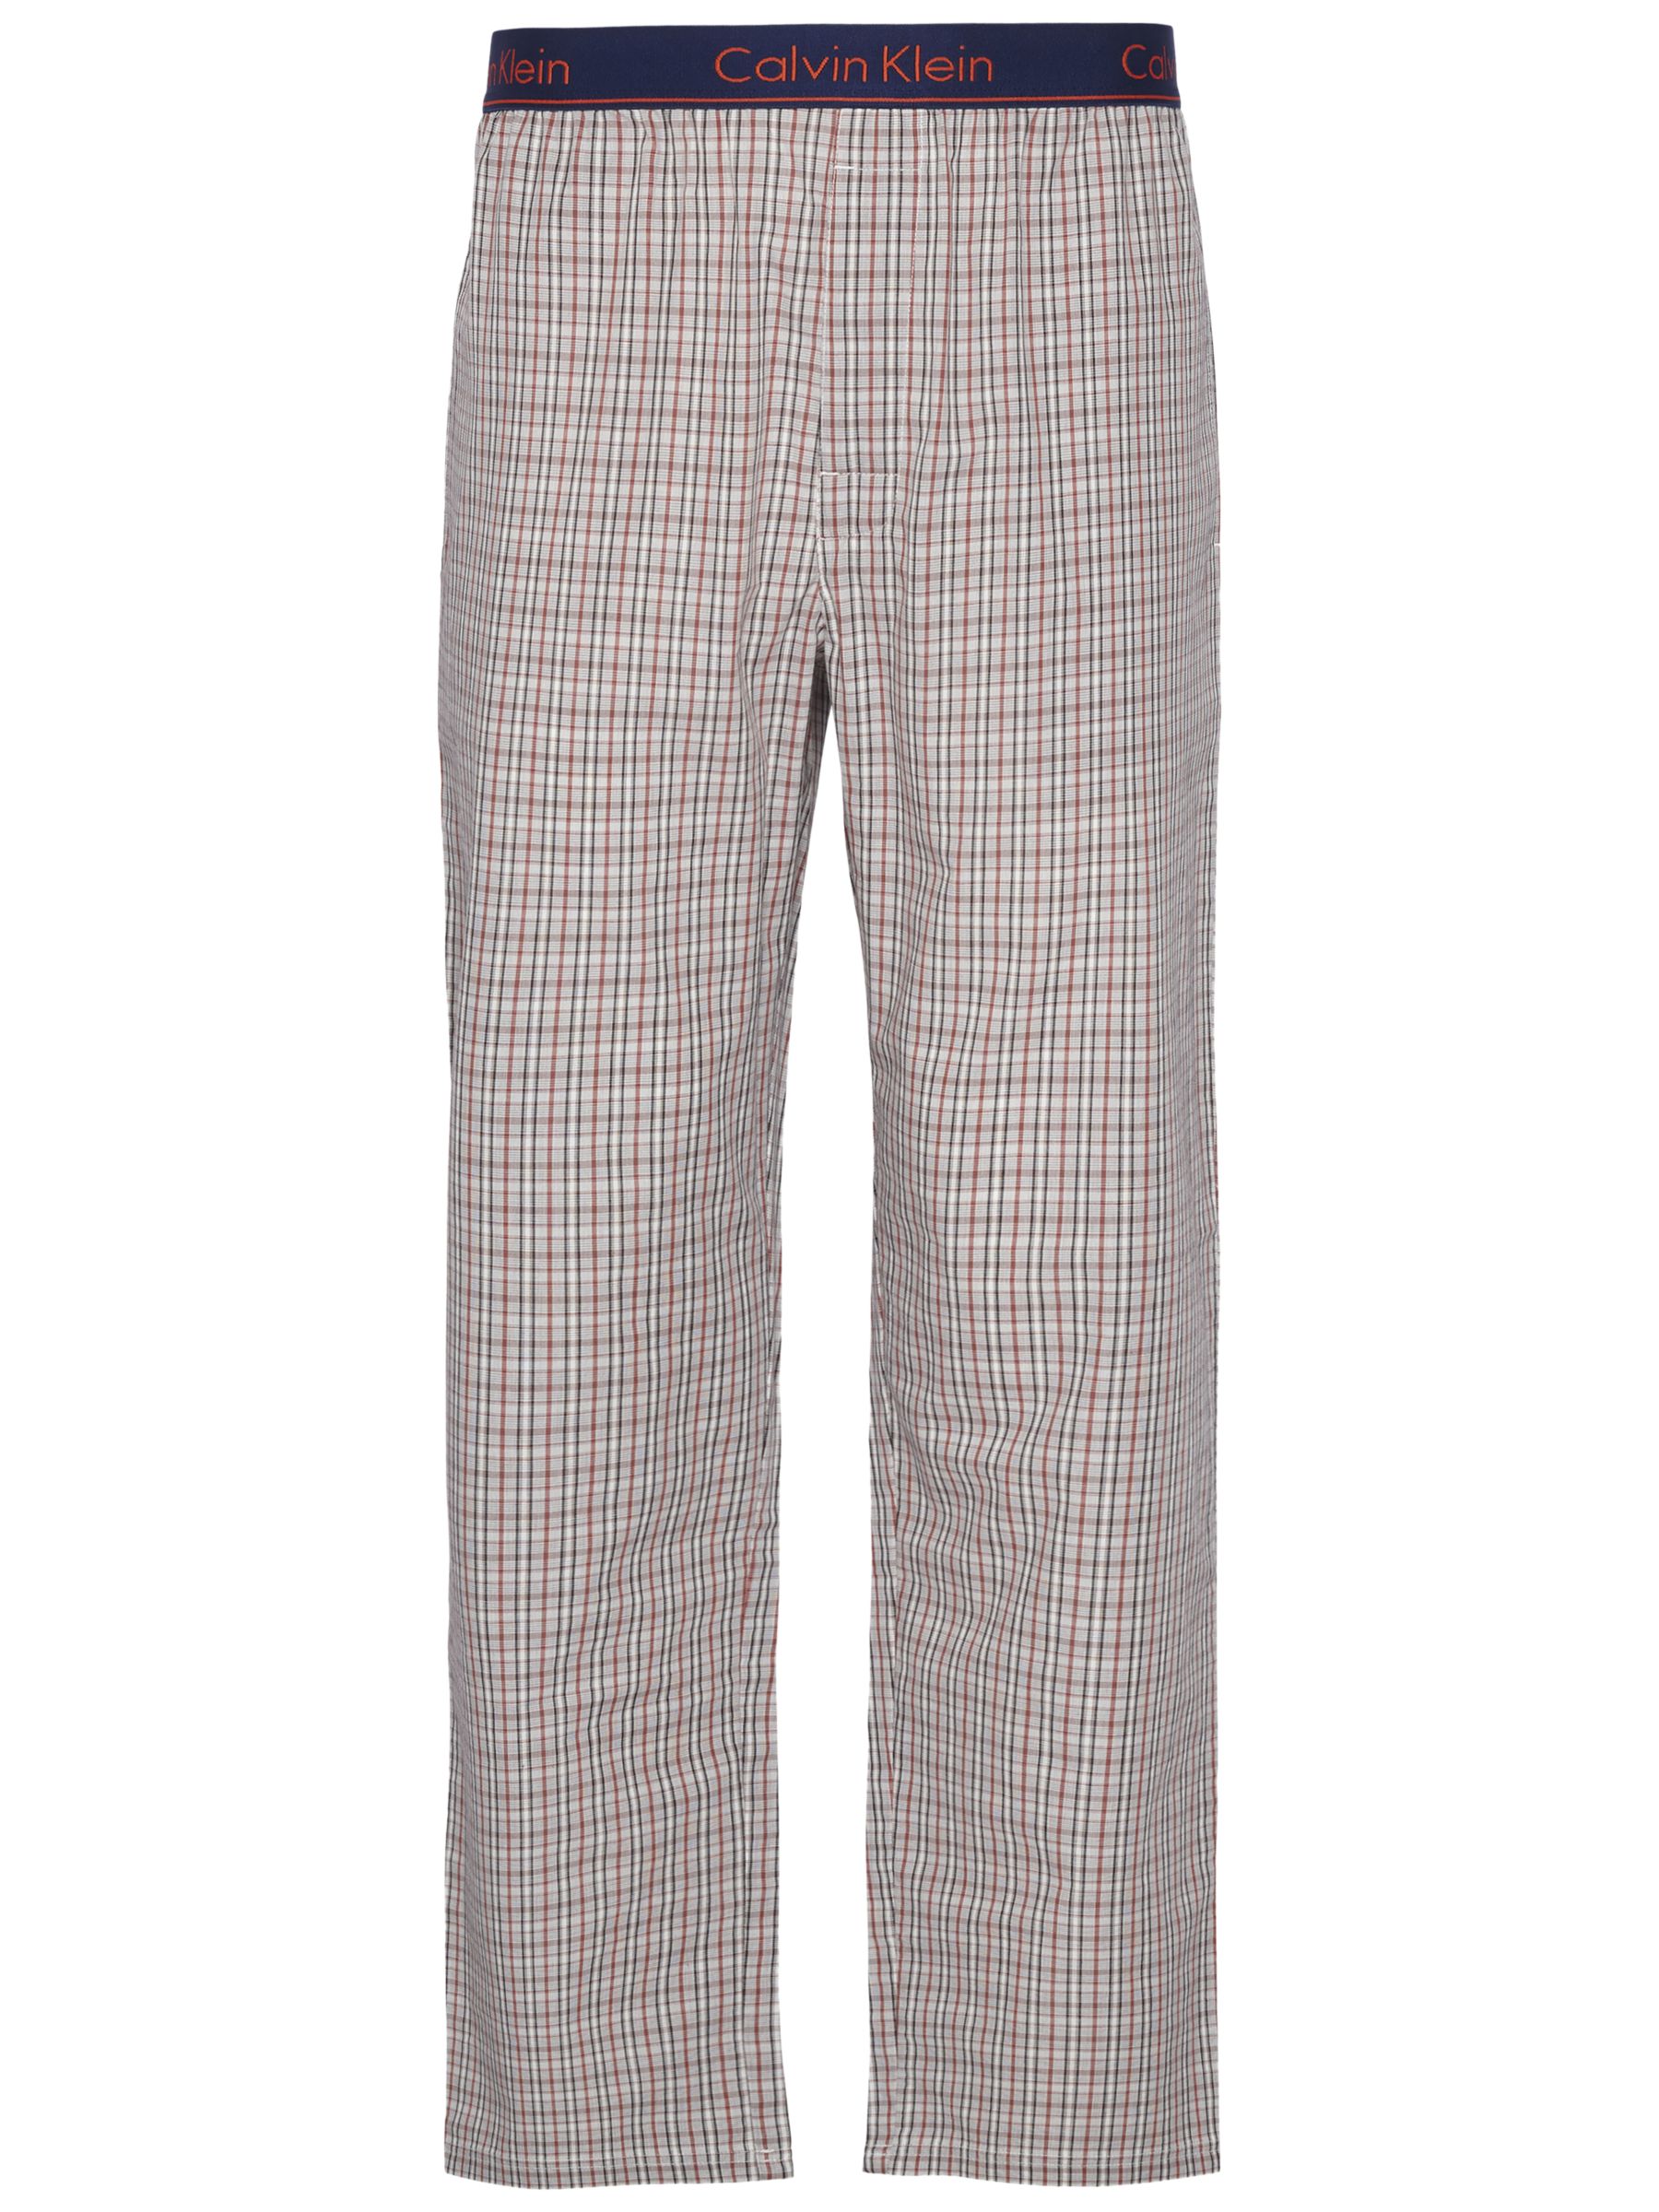 Calvin Klein Plaid Cotton Pyjama Pants, Multi